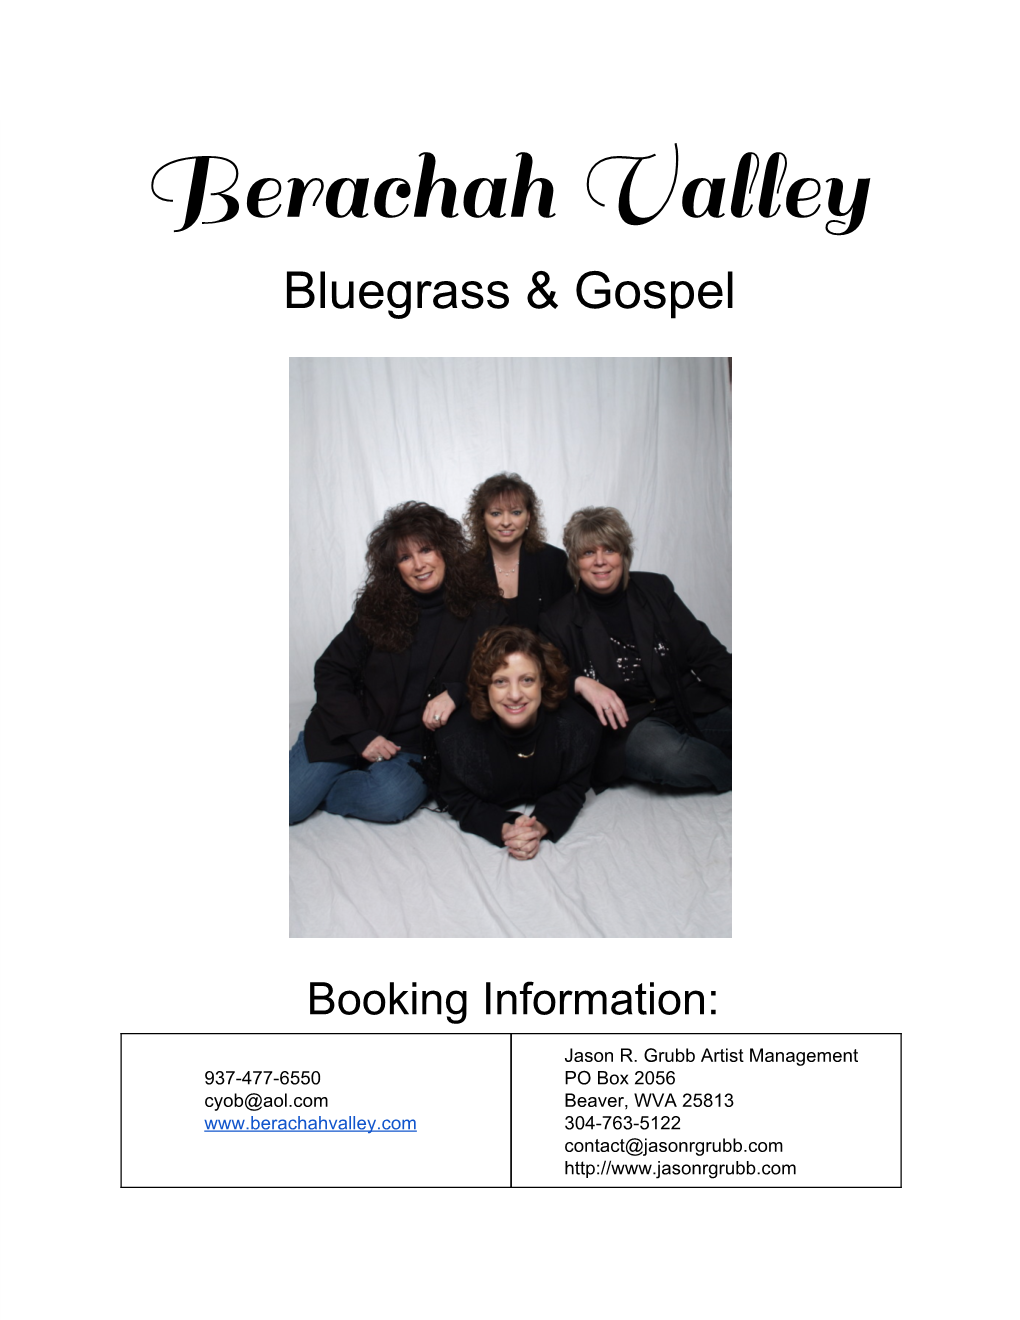 Berachah Valley Bluegrass & Gospel